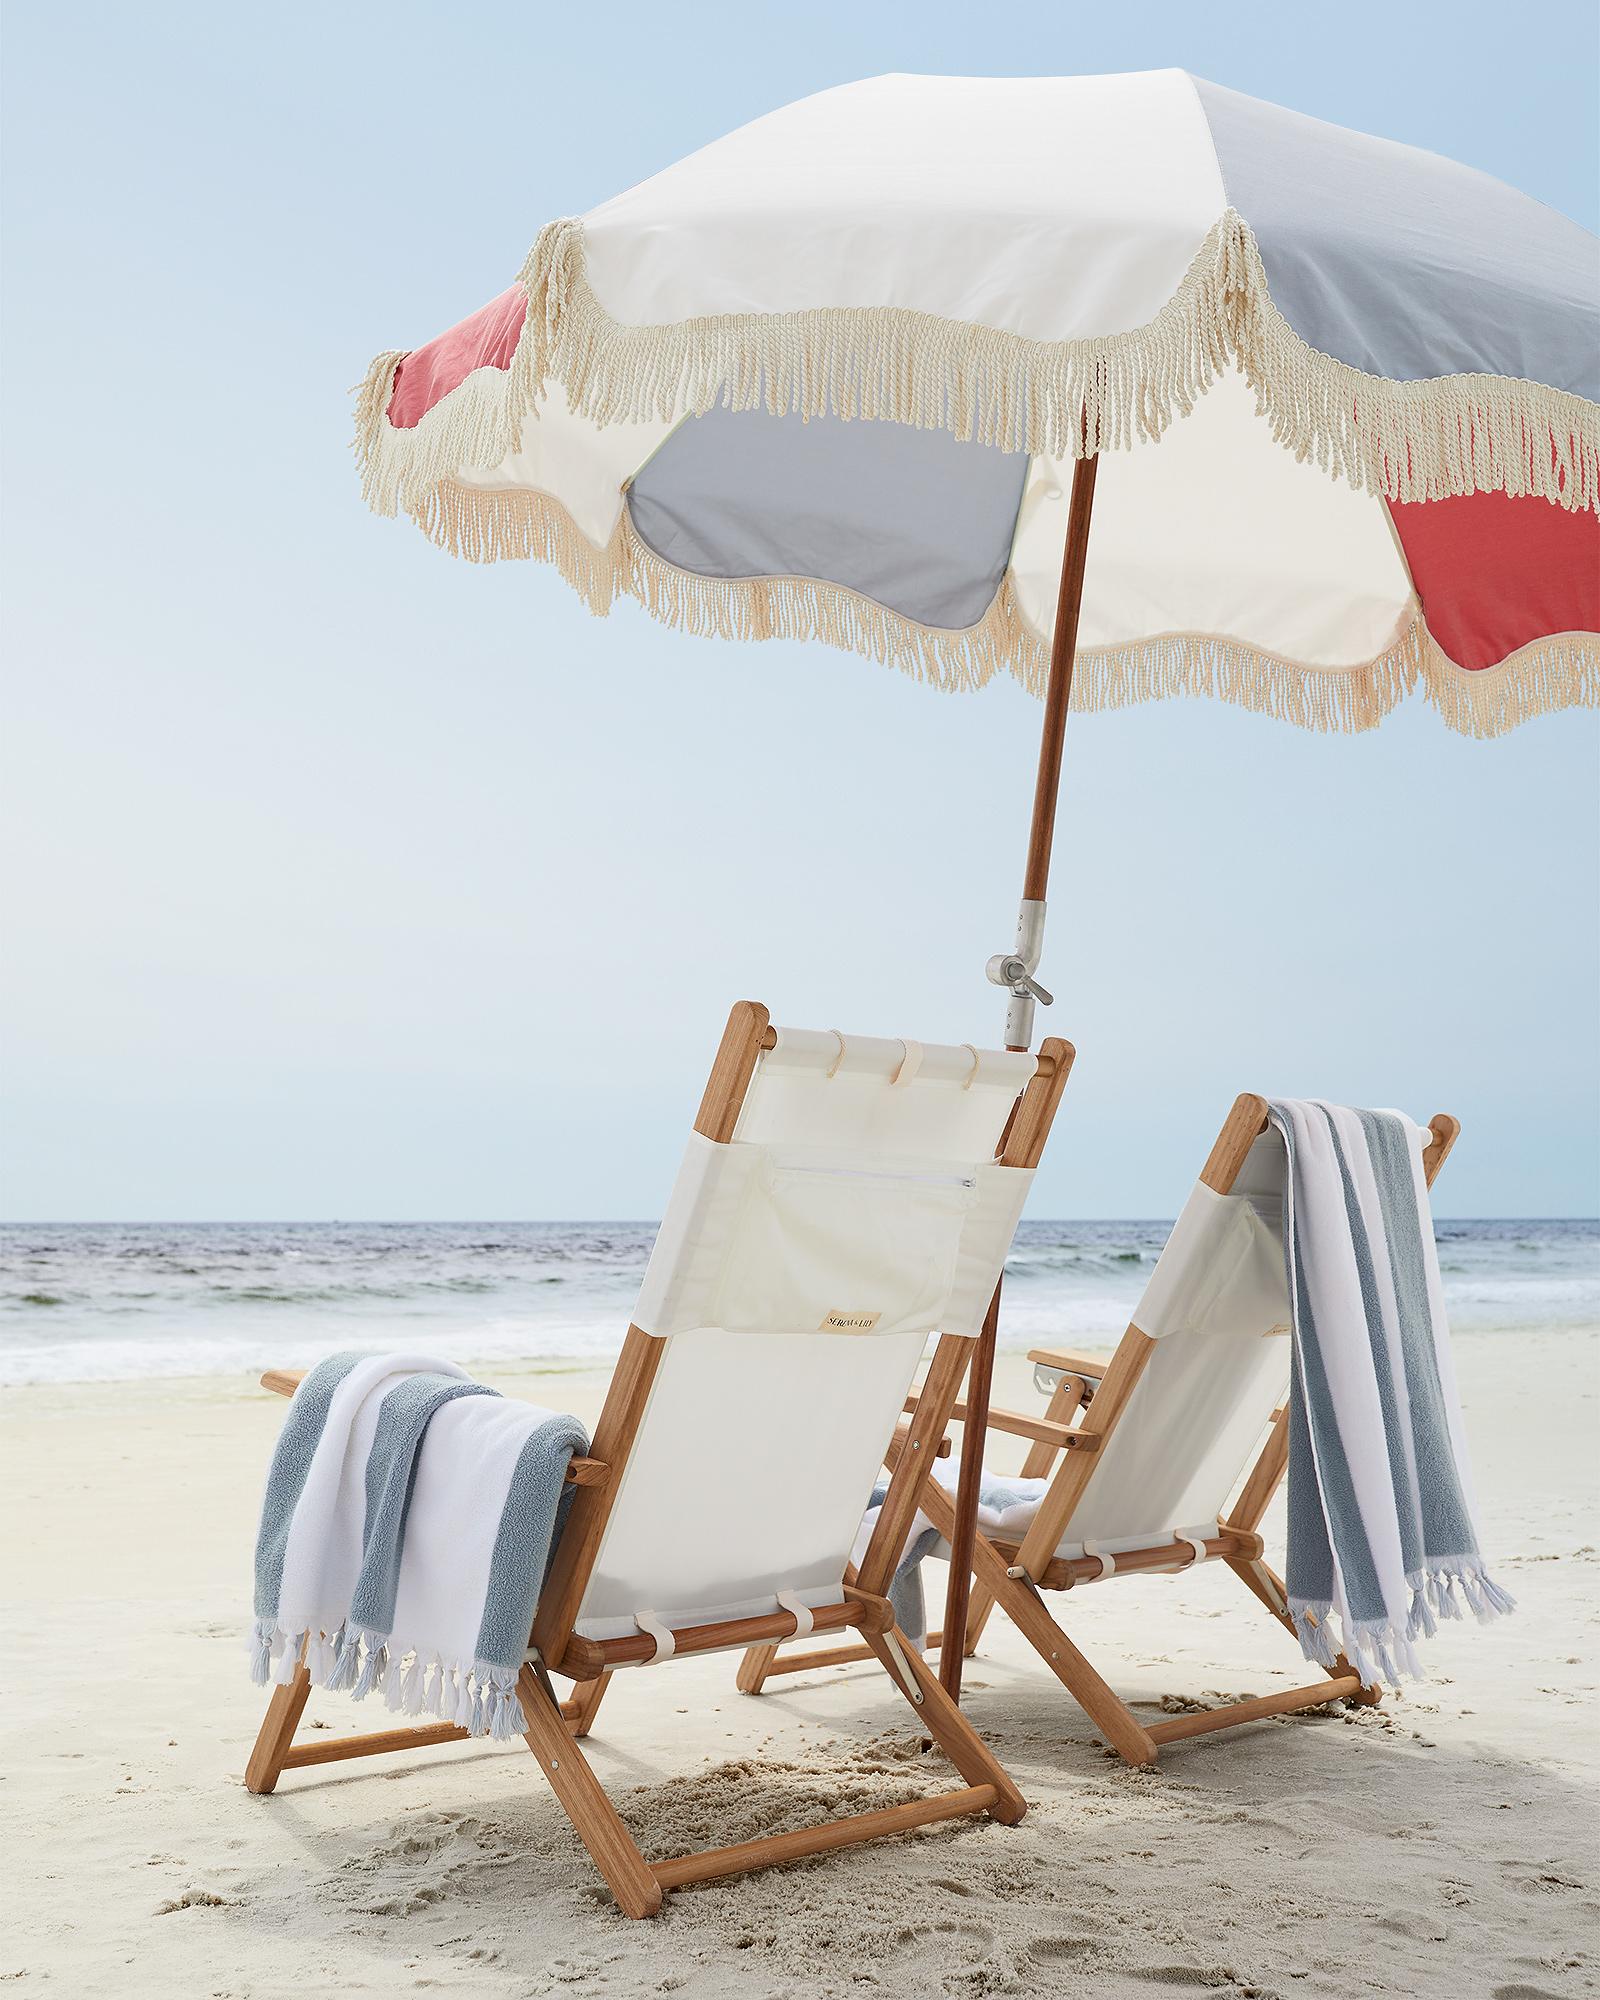 OD_Beach_Chairs_Umbrella-0332